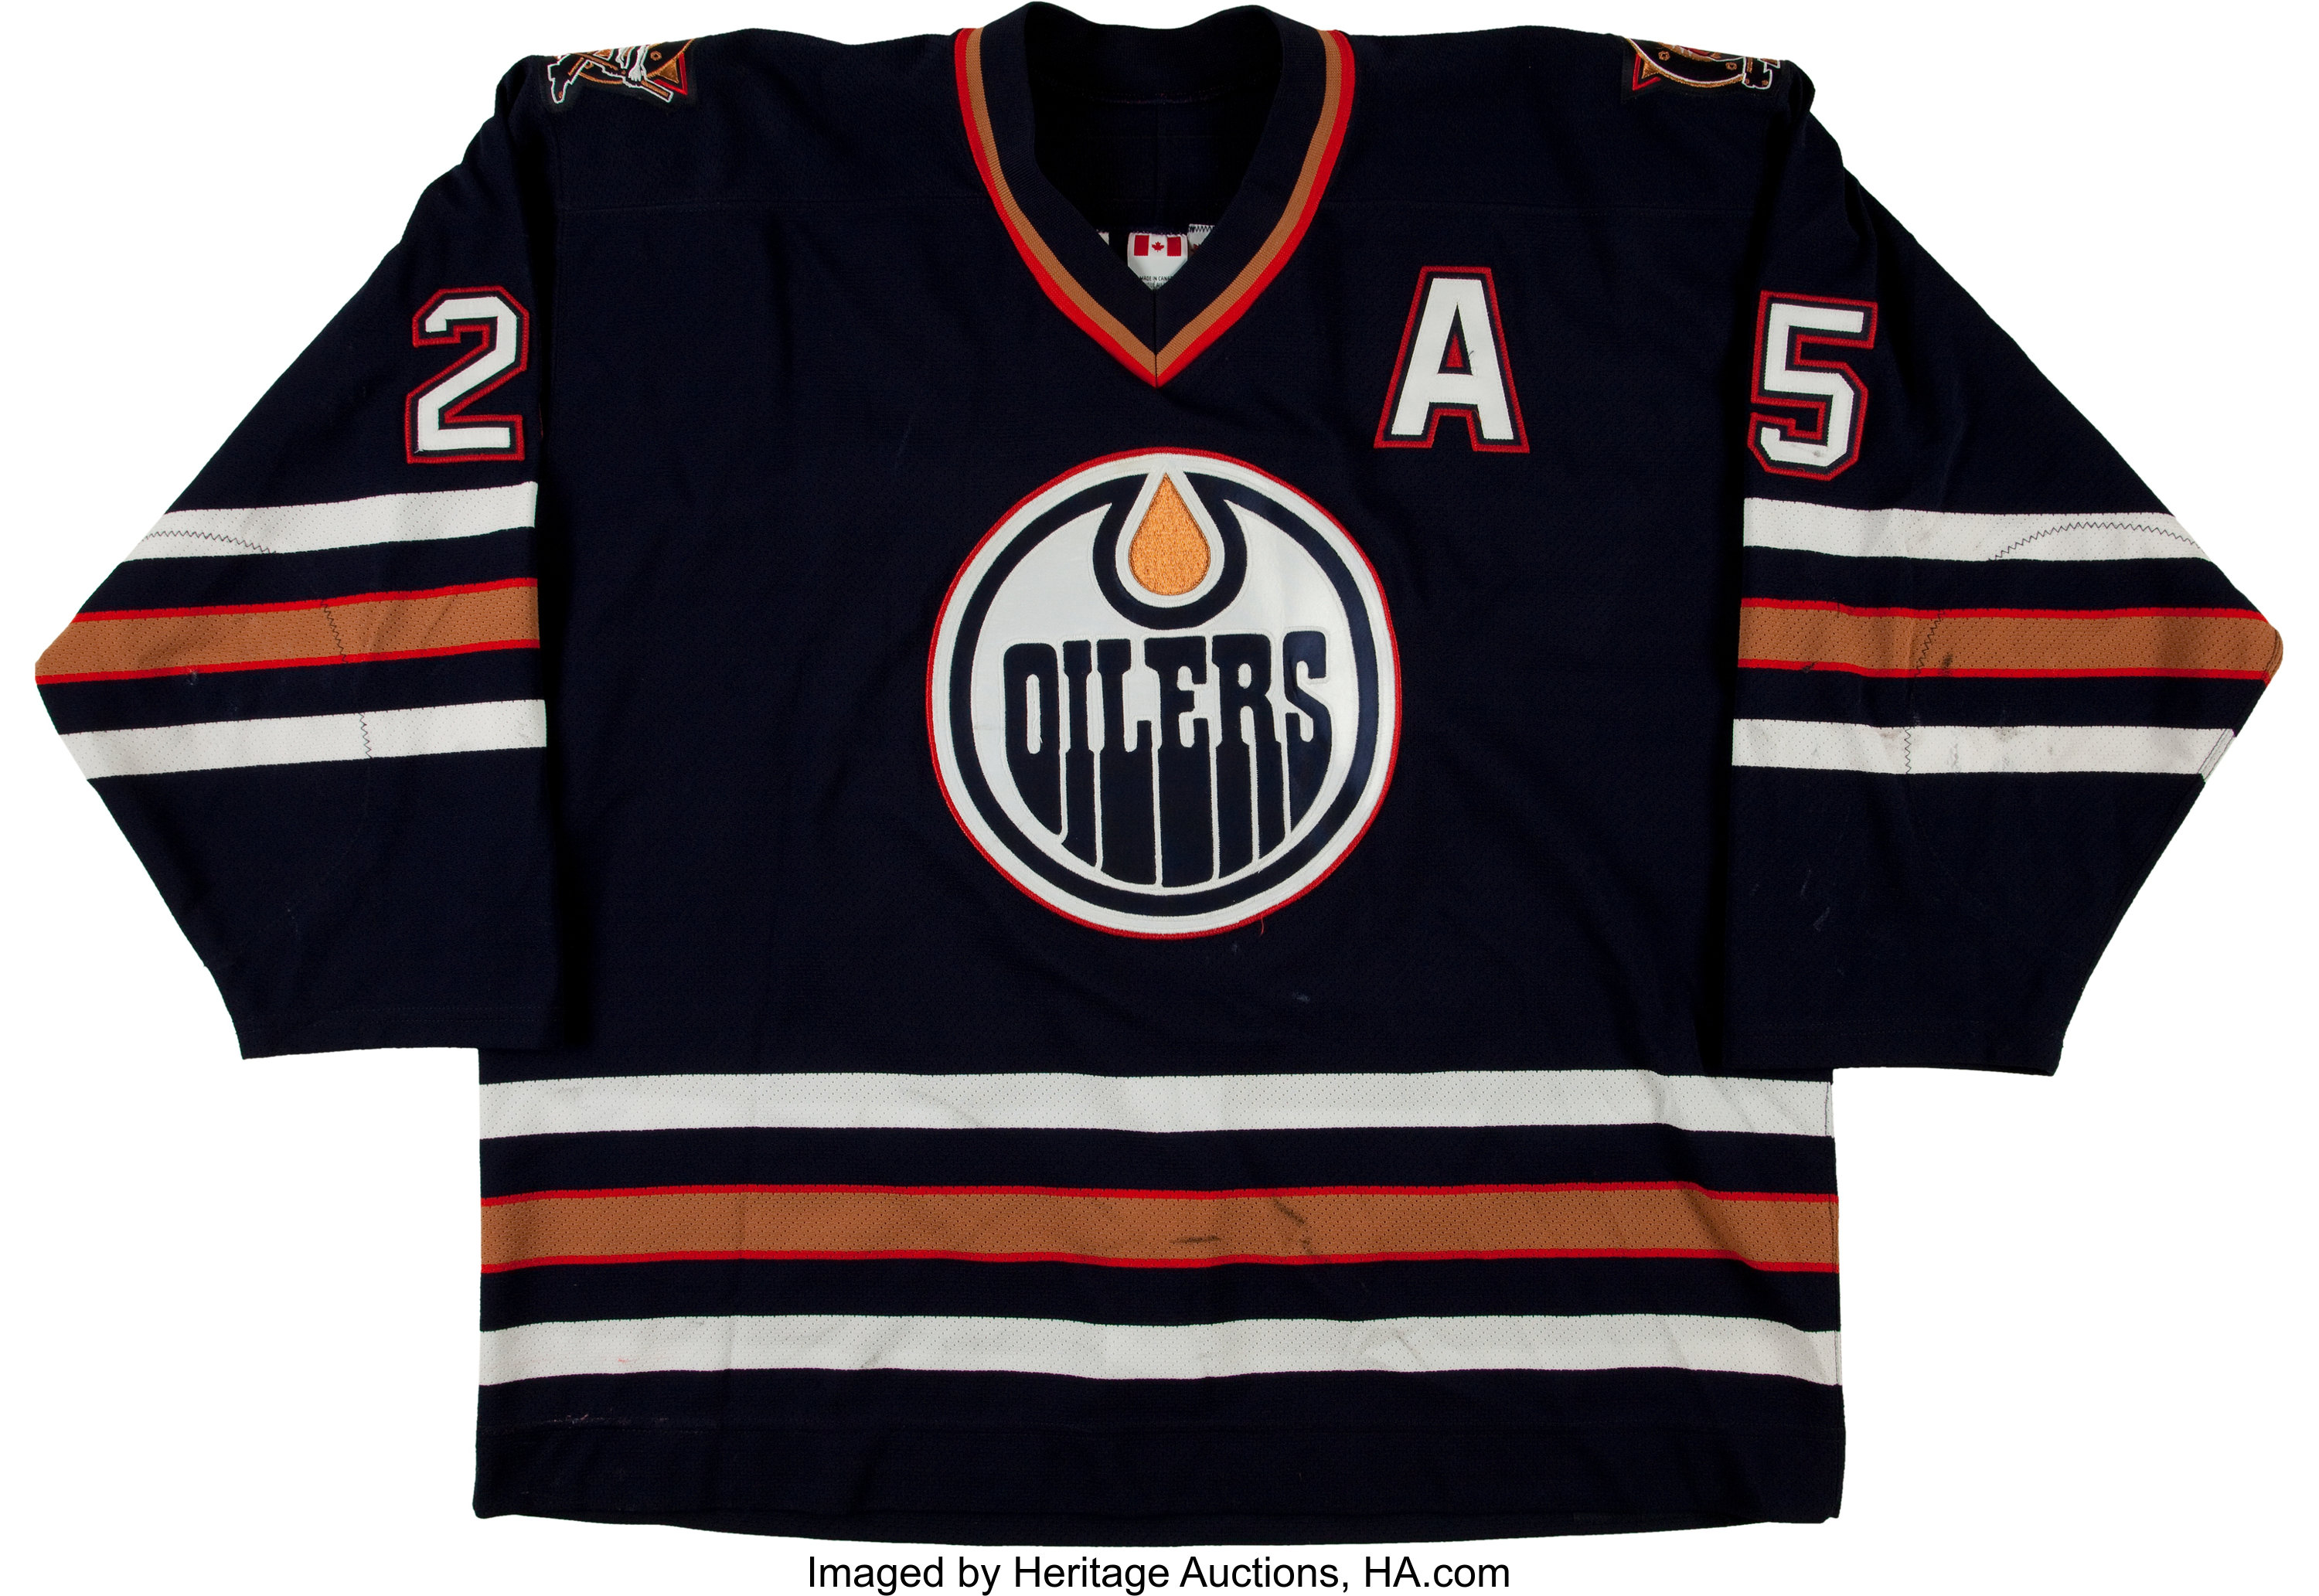 Edmonton Oilers Uniform Alternate Uniform (2001/02-2006/07) - This